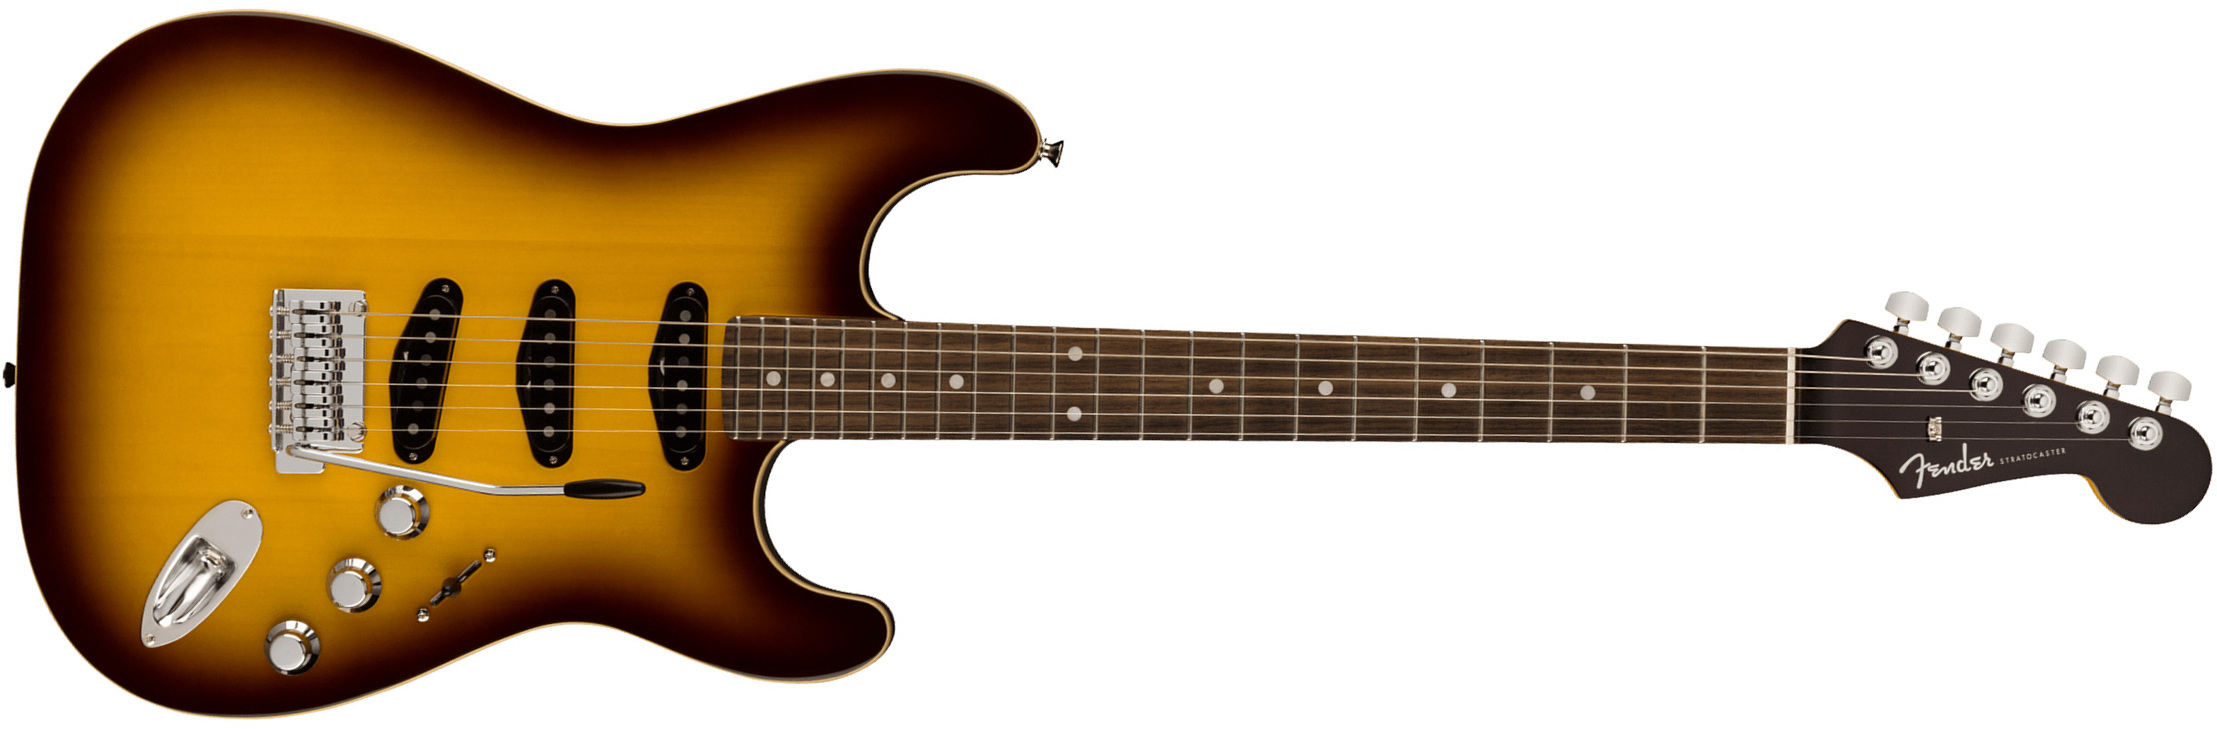 Fender Strat Aerodyne Special Jap 3s Trem Rw - Chocolate Burst - Guitarra eléctrica con forma de str. - Main picture